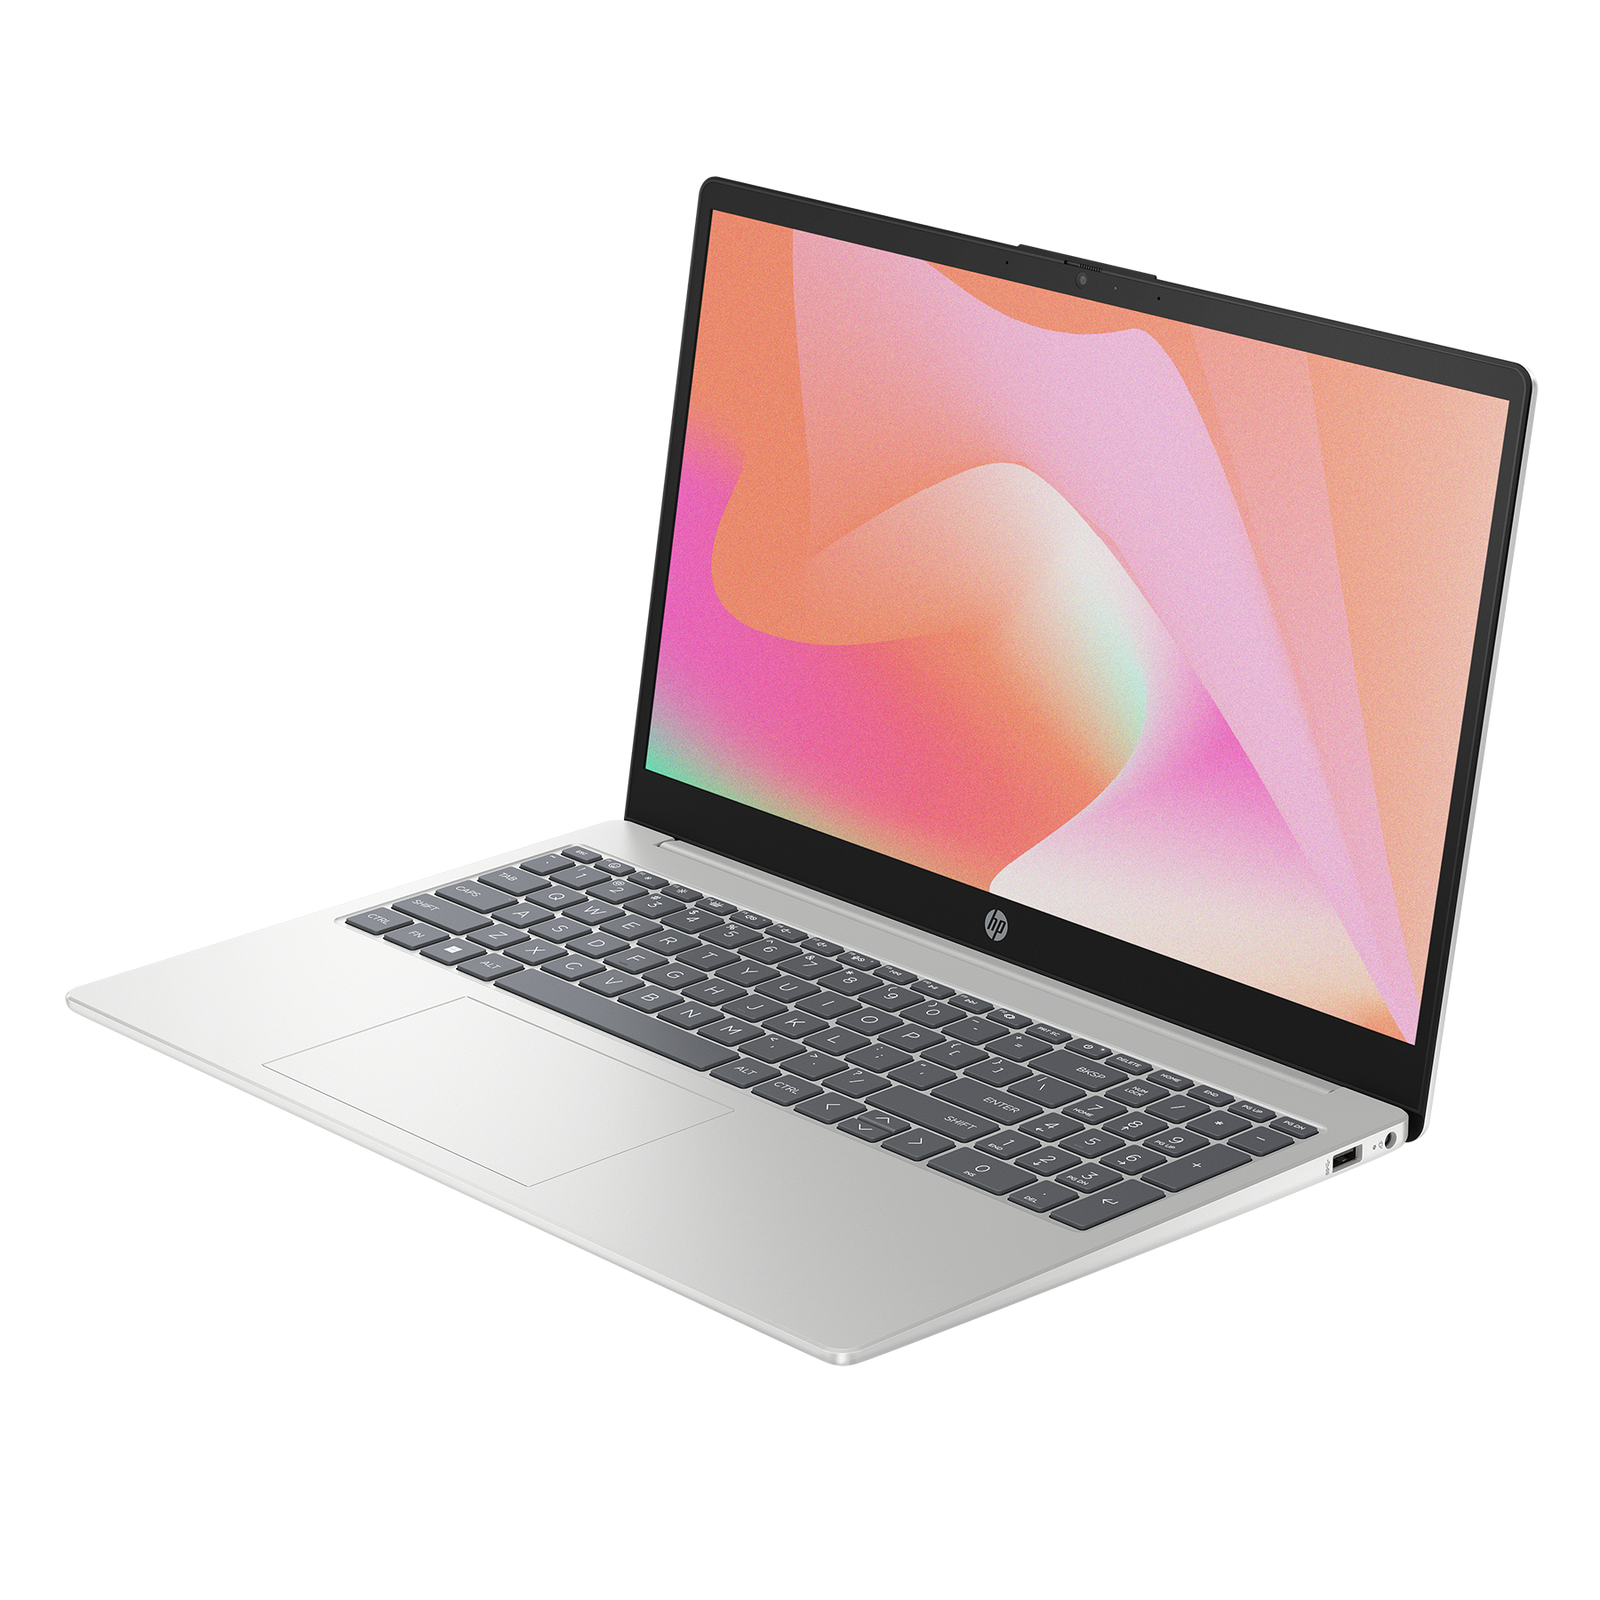 HP 15, fertig installiert 1000 RAM, 64 GB mit Office Pro, SSD, und 15,6 Silber 2021 aktiviert, Notebook Display, Zoll GB